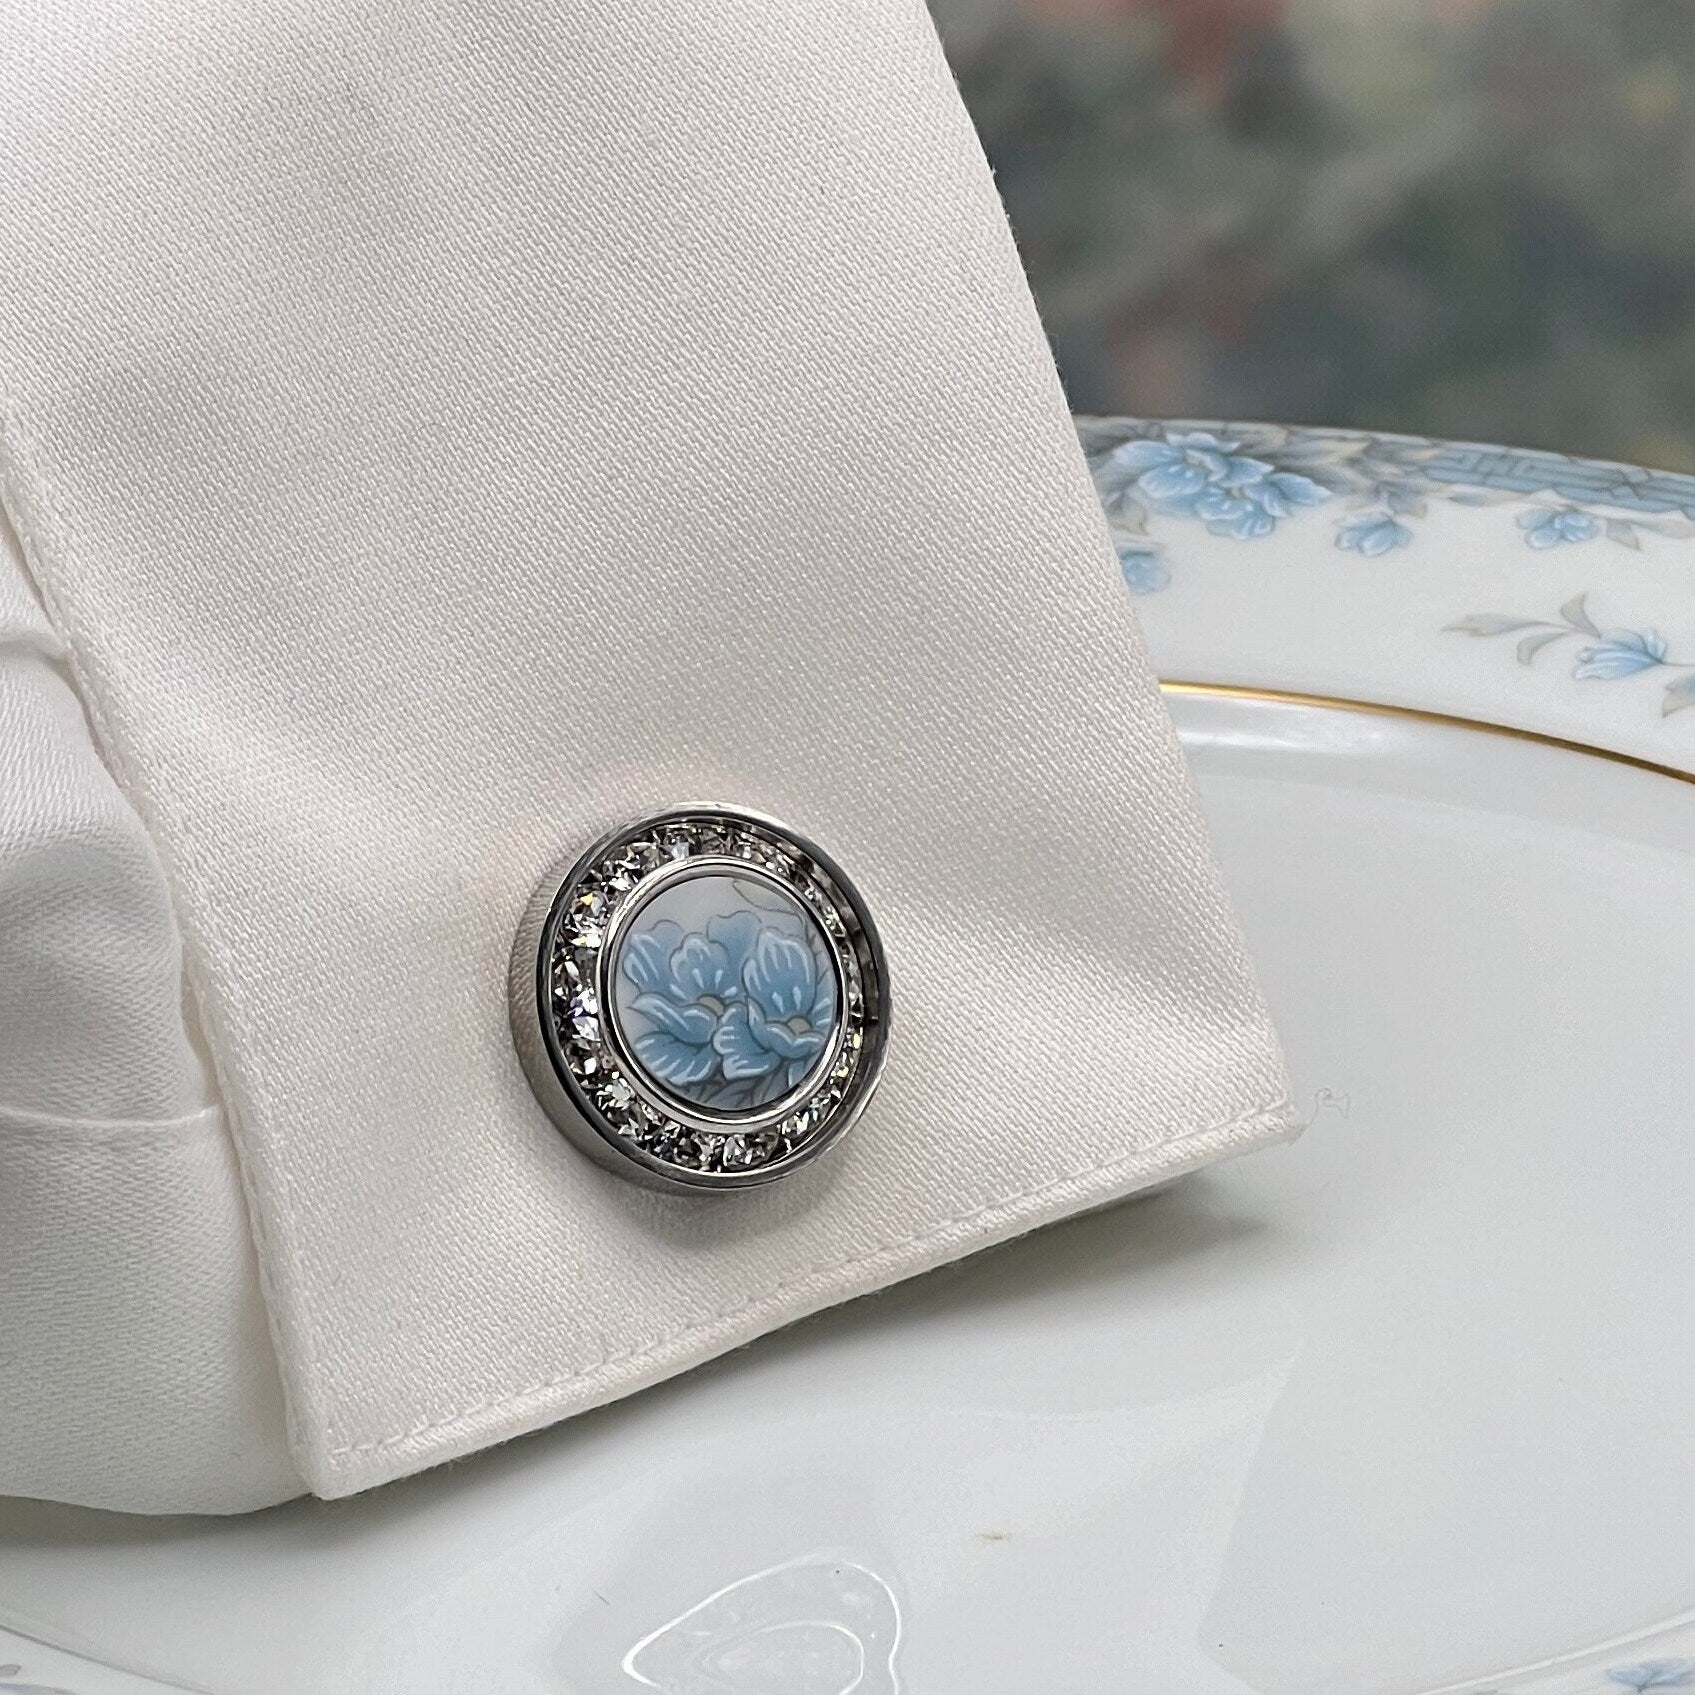 Blue Rose Wedding Cufflinks, Elegant Crystal Cuff Links, Unique Groom Jewelry for Men or Women, Vintage Broken China Jewelry, Blue Wedding